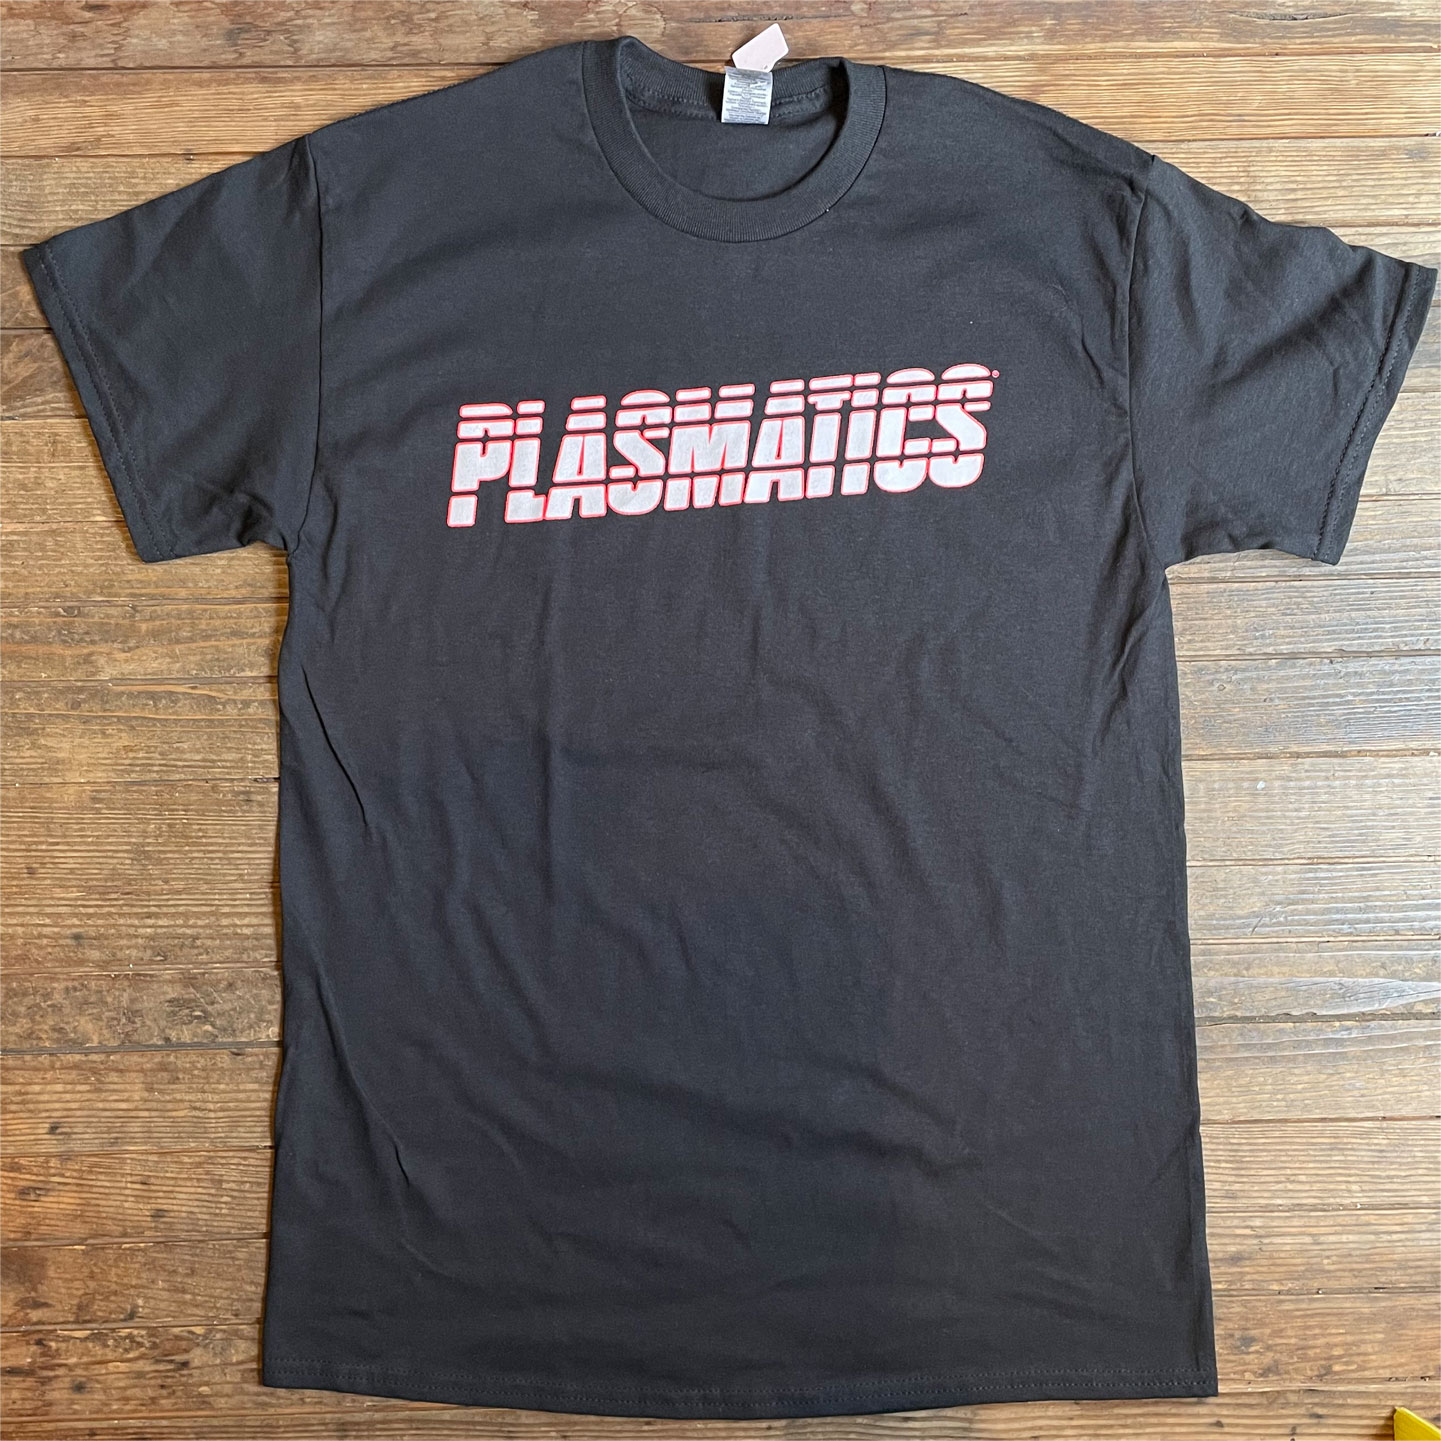 PLASMATICS Tシャツ TOUR1984 オフィシャル